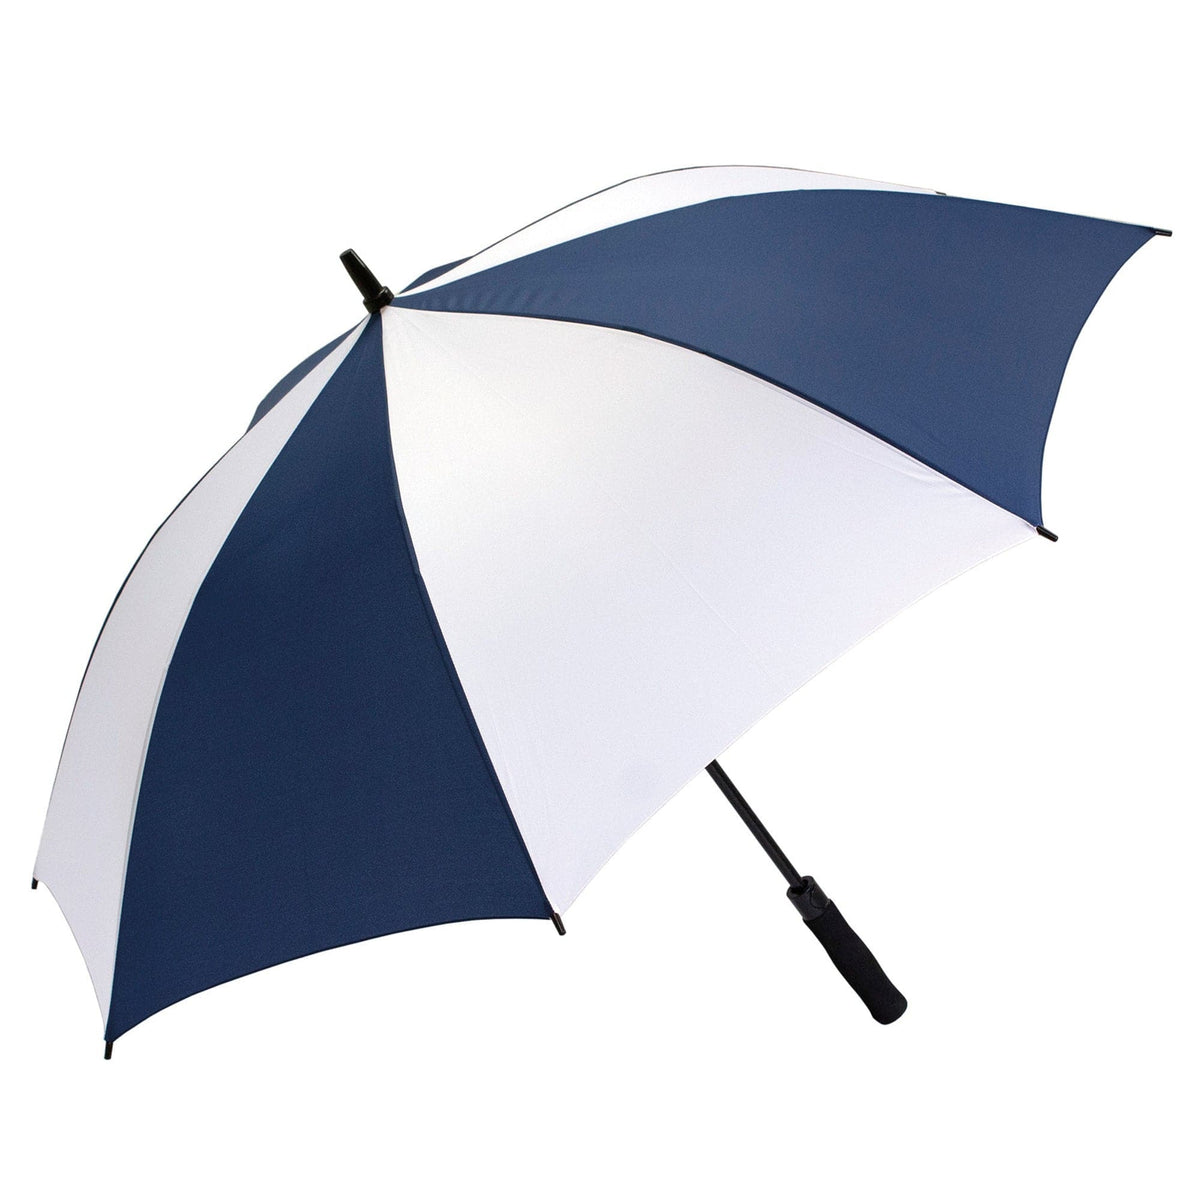 Haas-Jordan Zeus Umbrella